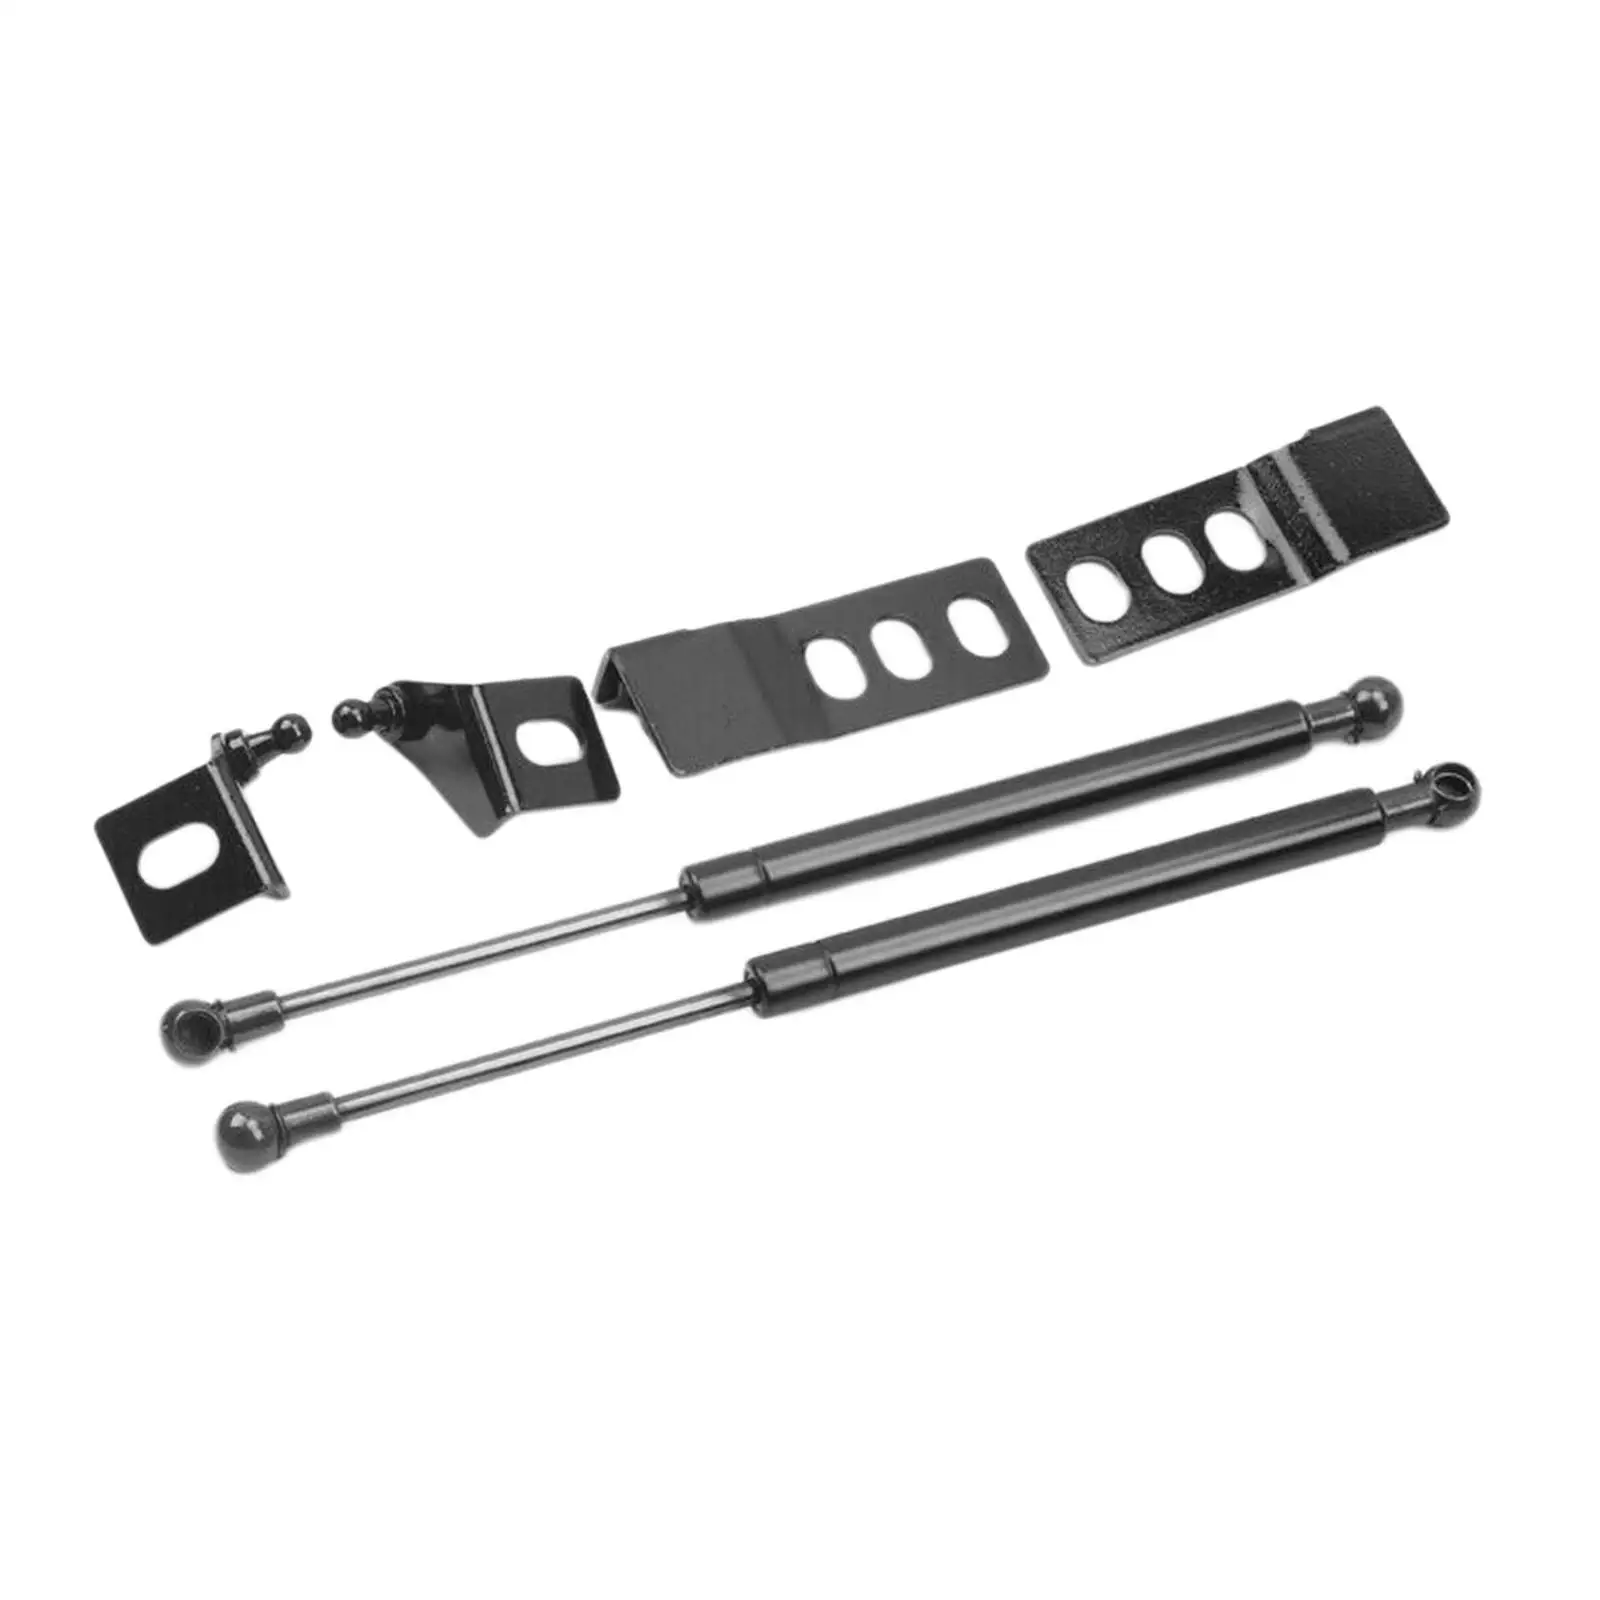 

Vehicle Front Hood Hydraulic Rod Strut Shock Bar Moulding Set Supplies Kit for Rav-4 19-21 2019-2021 2019 2020 2021